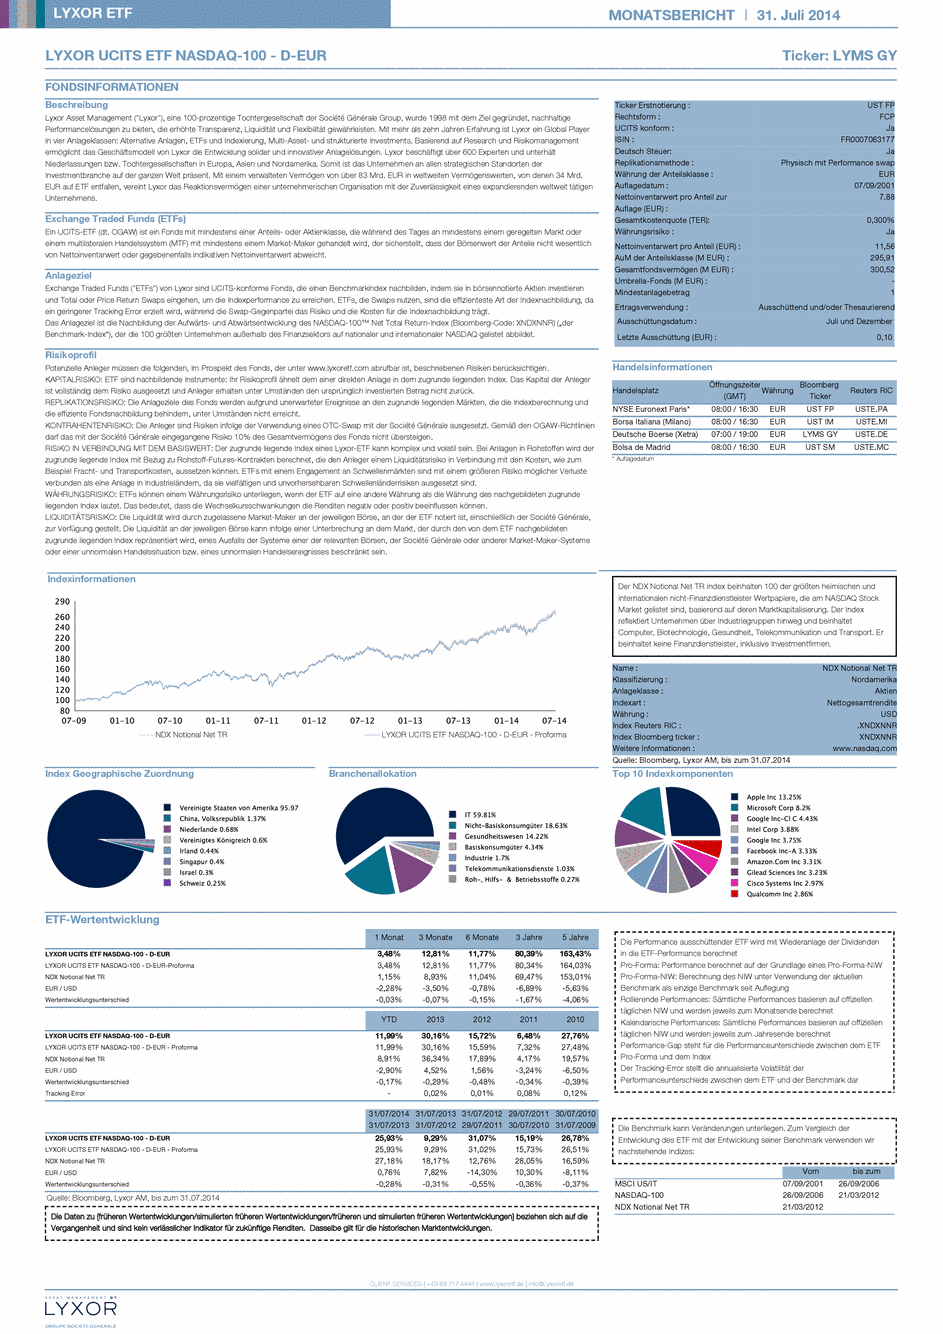 Reporting LYXOR NASDAQ-100 UCITS ETF - D-EUR - 31/07/2014 - German